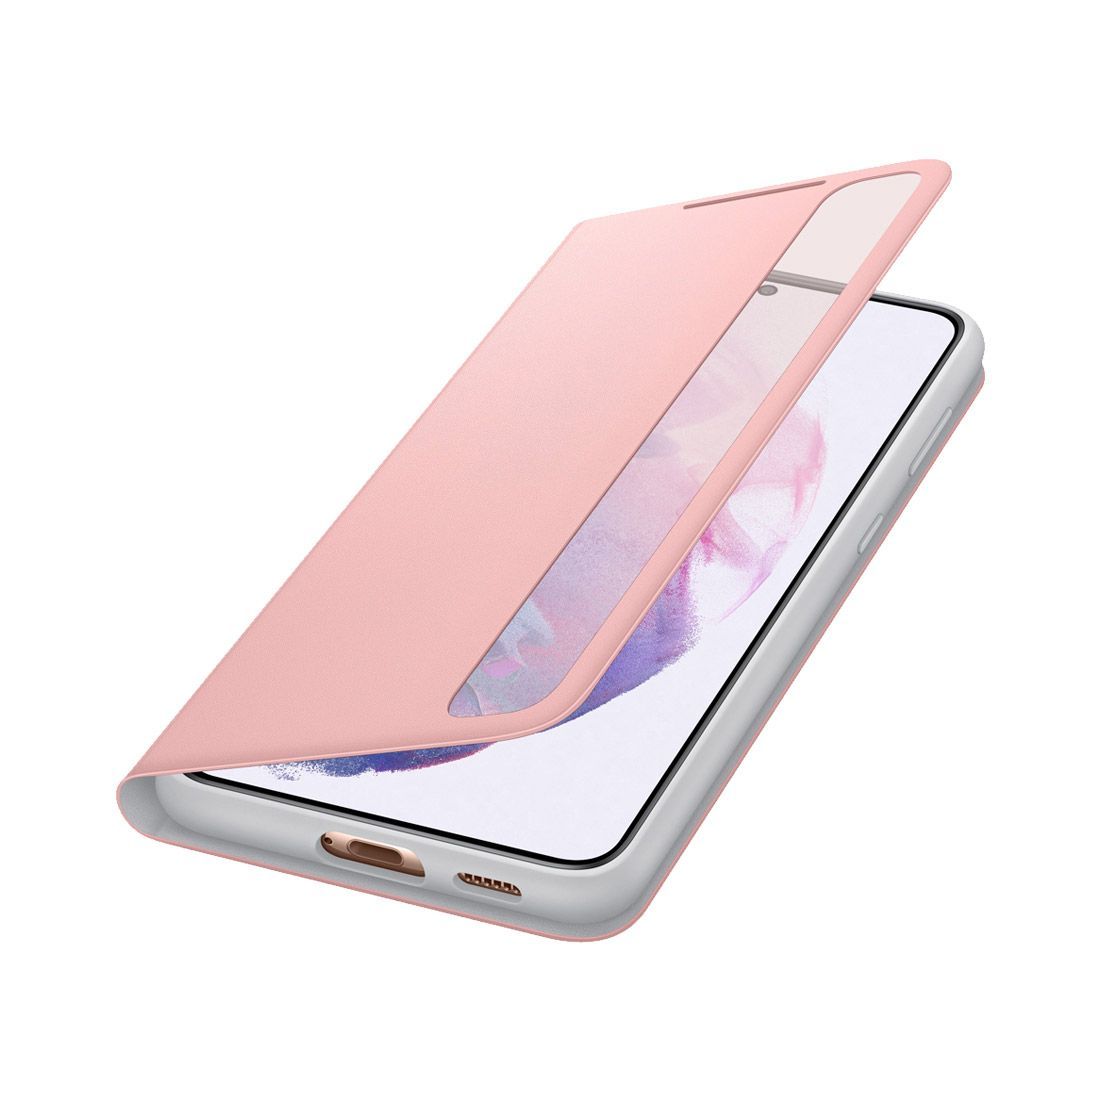 Galaxy S21+ Puls 5G ◆ SMART CLEAR VIEW COVER/ピンク [Samsung 純正ケース 並行輸入品] カバー 1_画像3